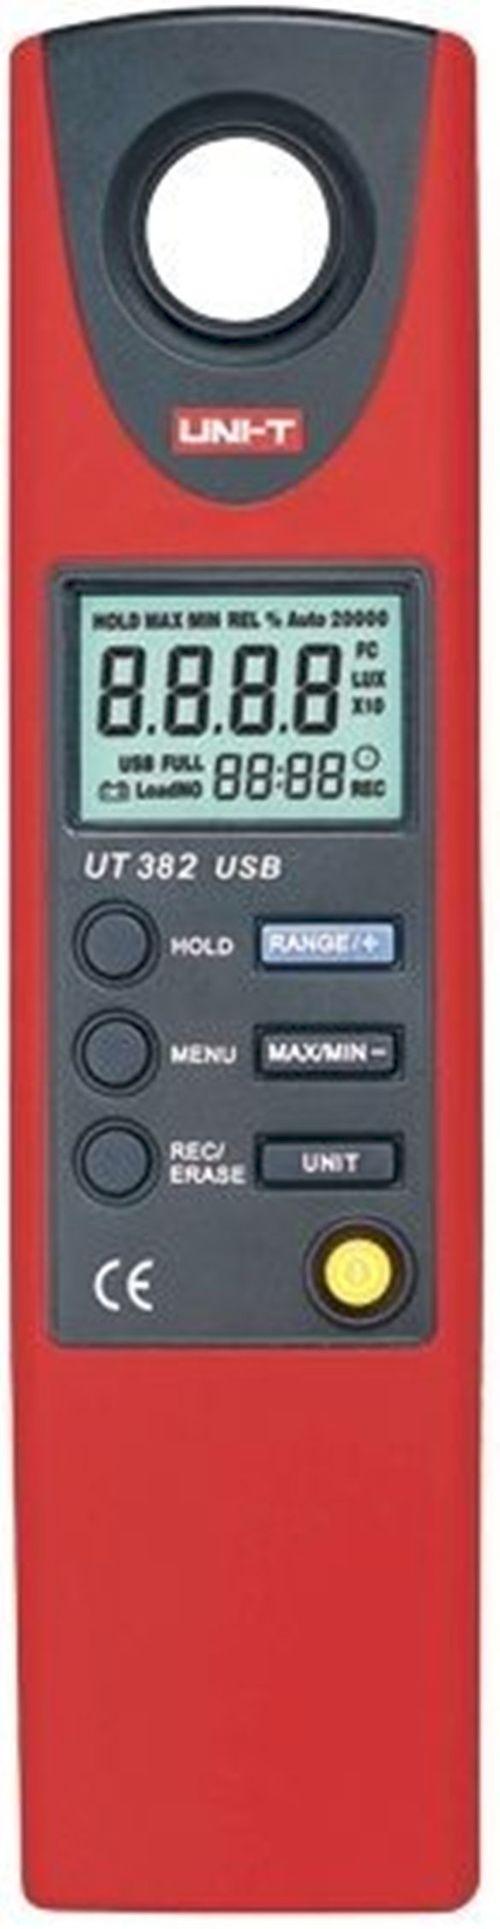 Luxímetro Digital Usb 20 ~ 20000 Lux - Uni-t (ut382usb)